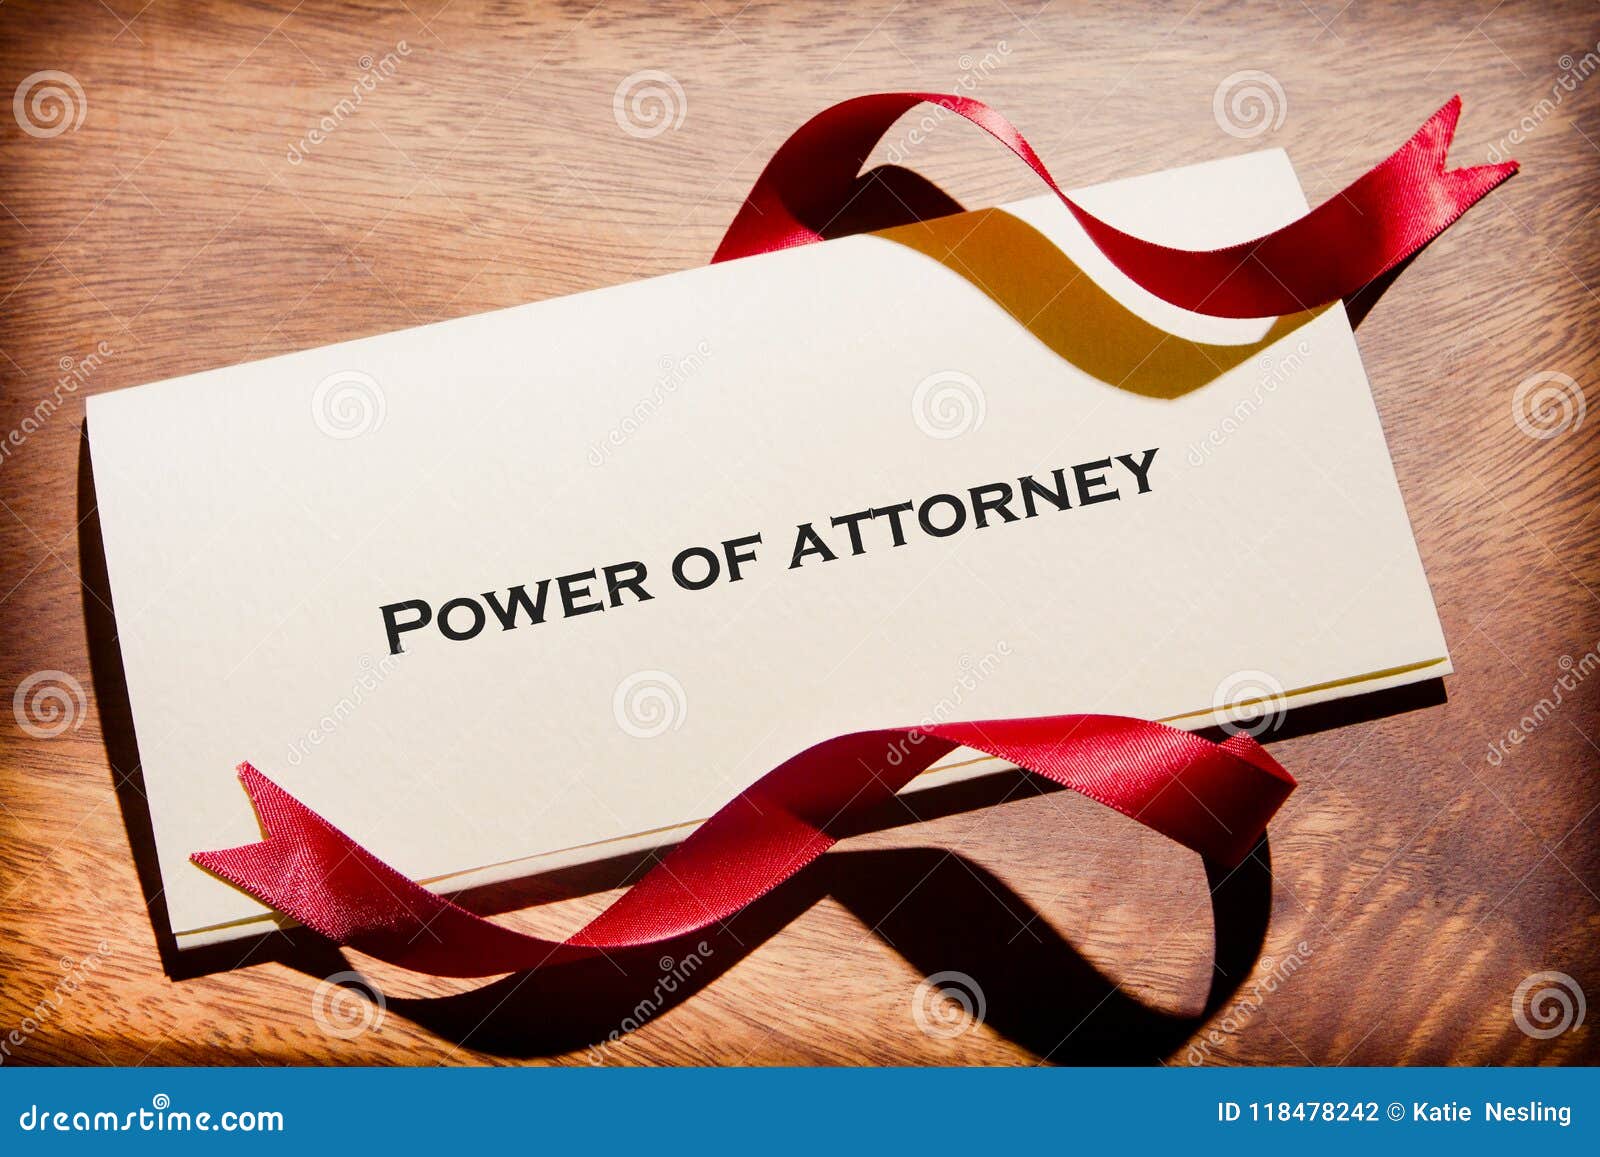 still life of power of attorney document on desk